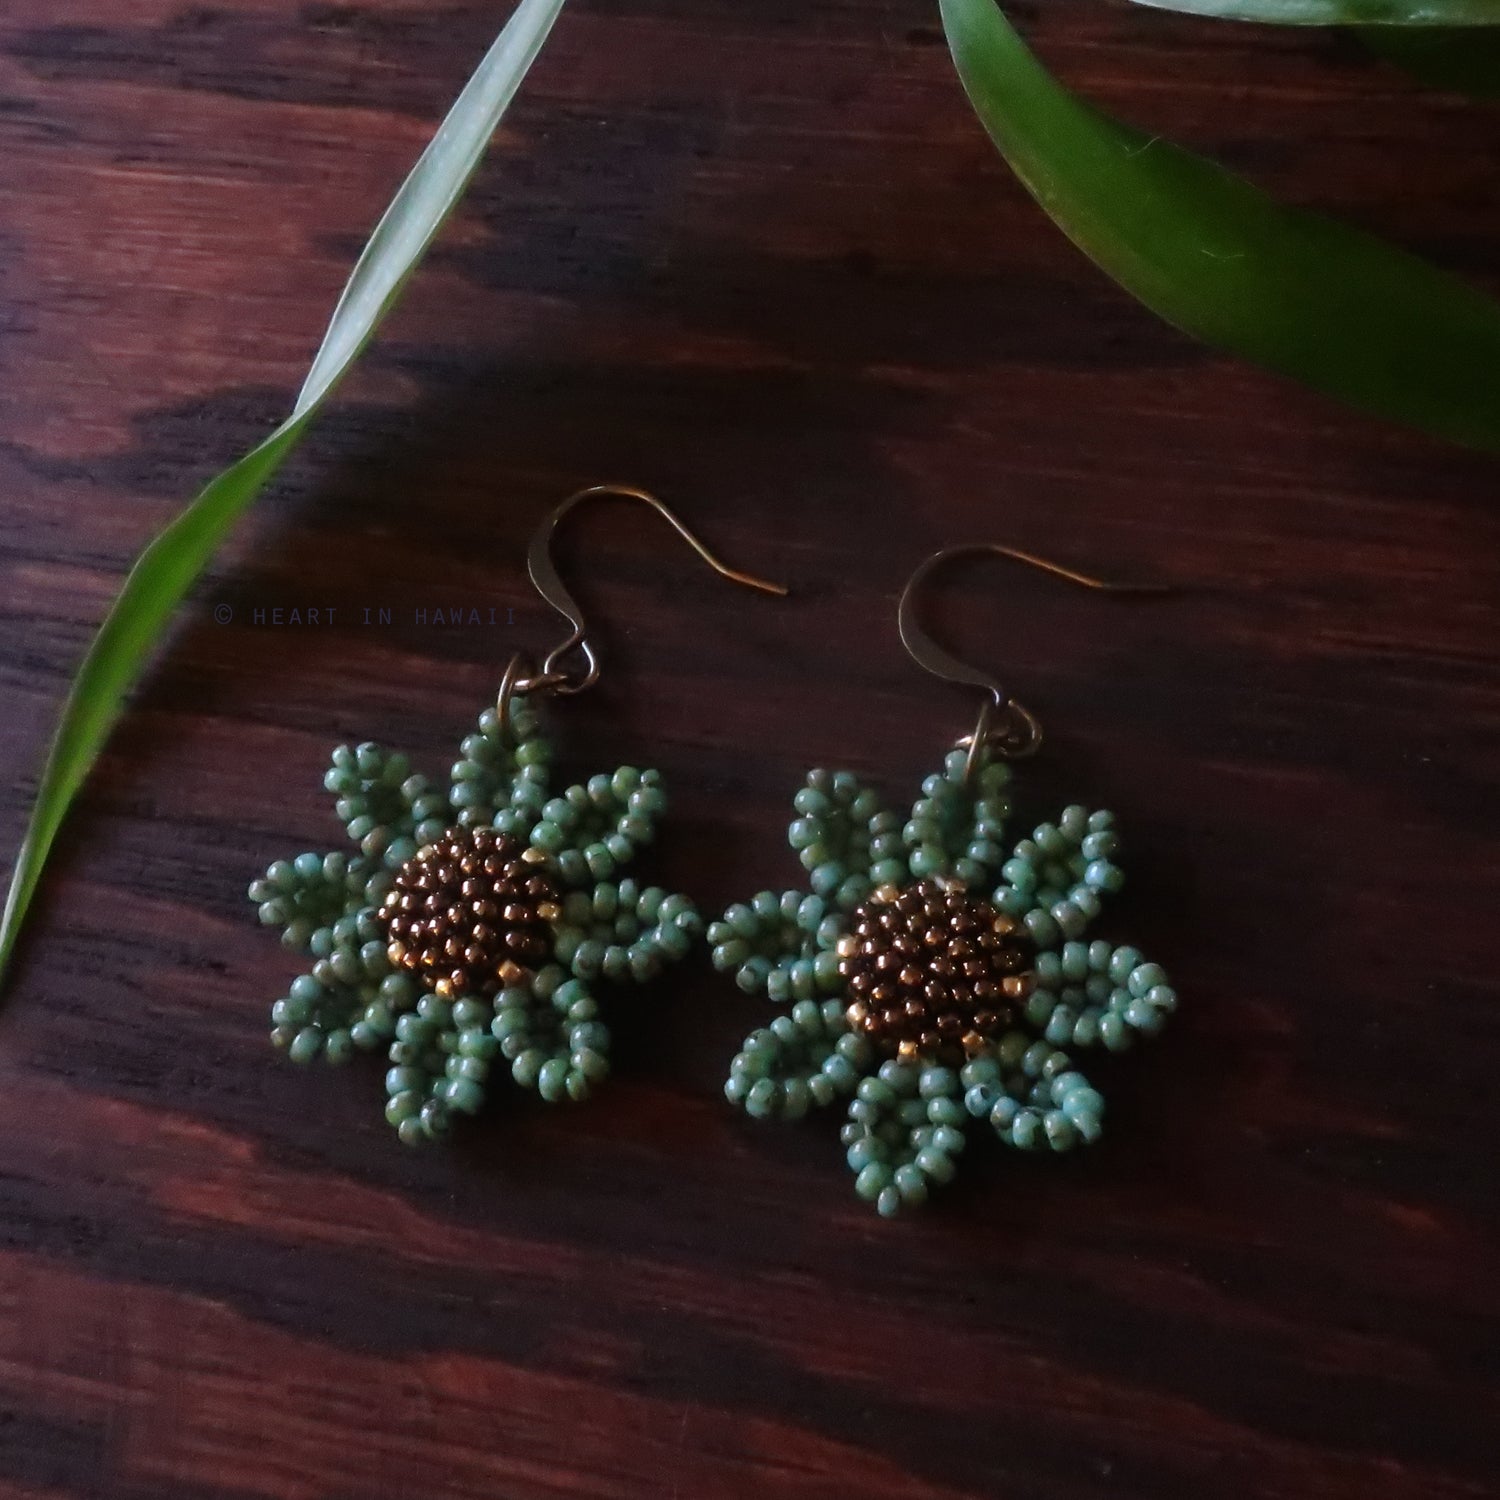 Heart in Hawaii Beaded Cosmos Flower Earrings - Faux Turquoise